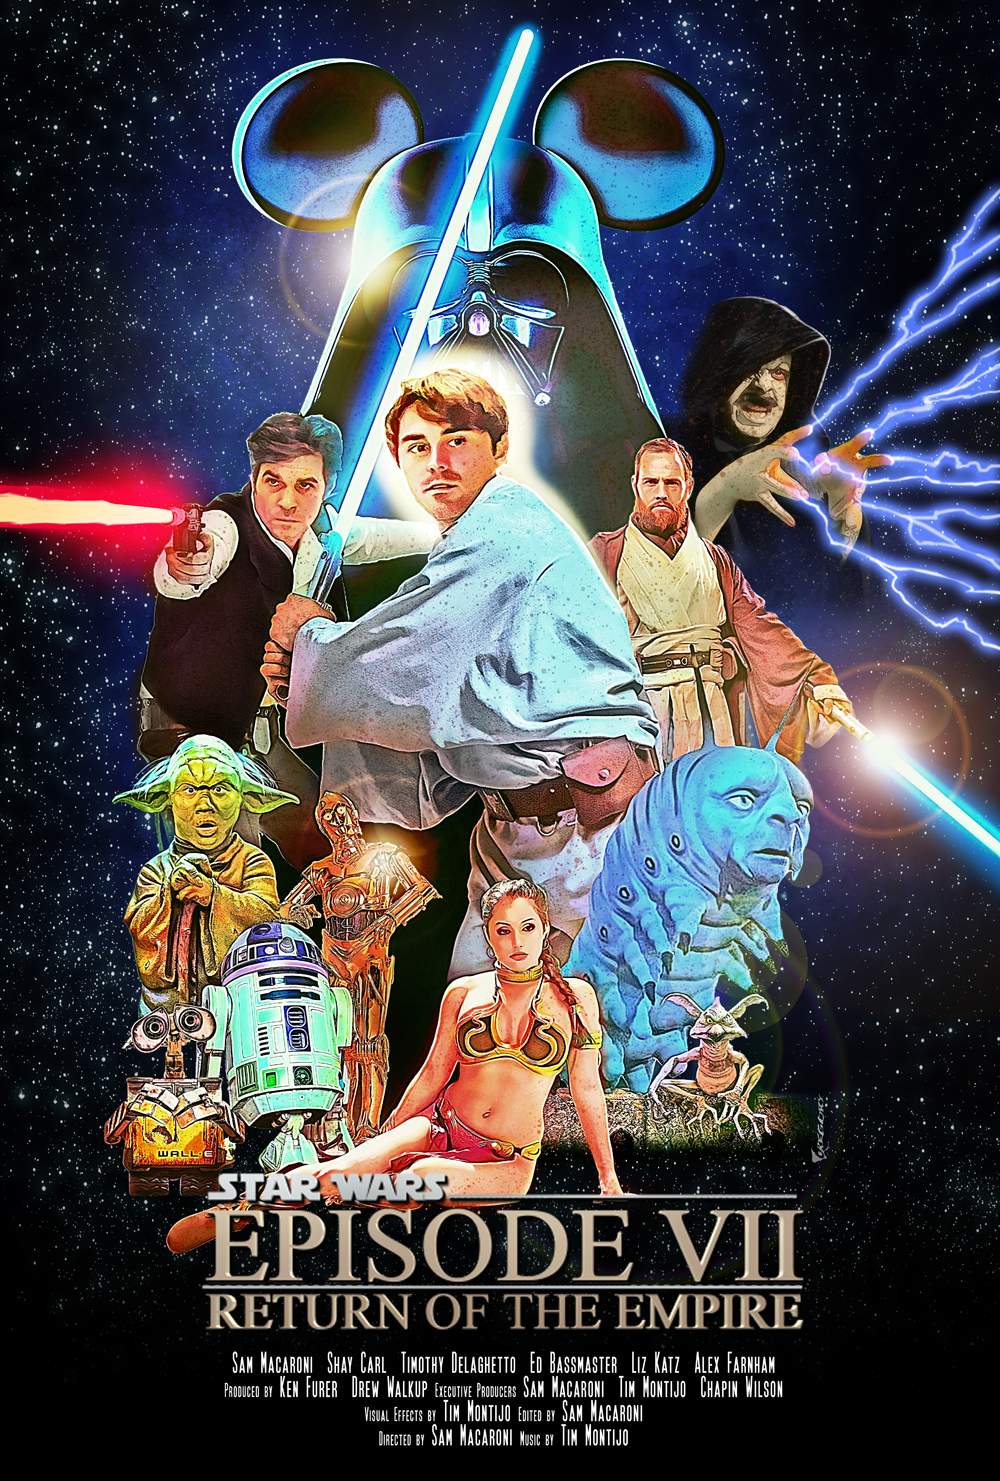 Star Wars Episode VII - Return of the Empire